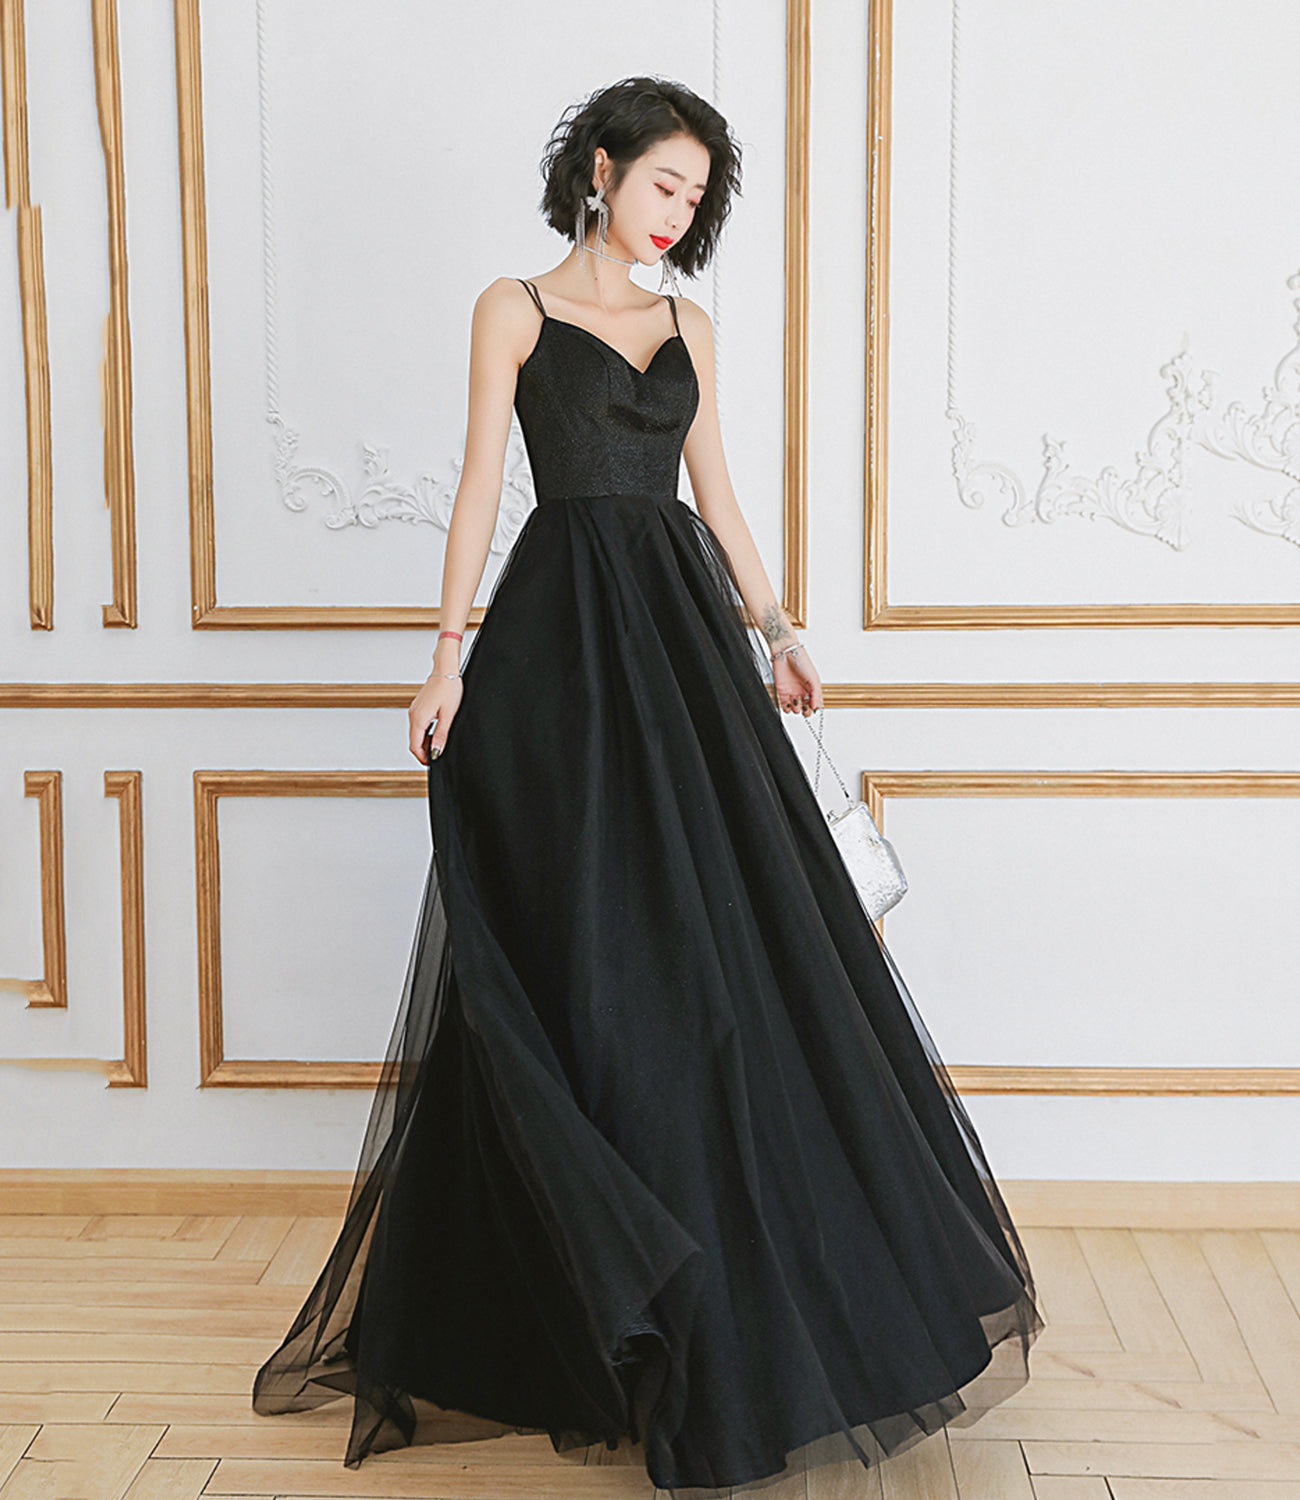 Black tulle long A line prom dress evening dress  8673